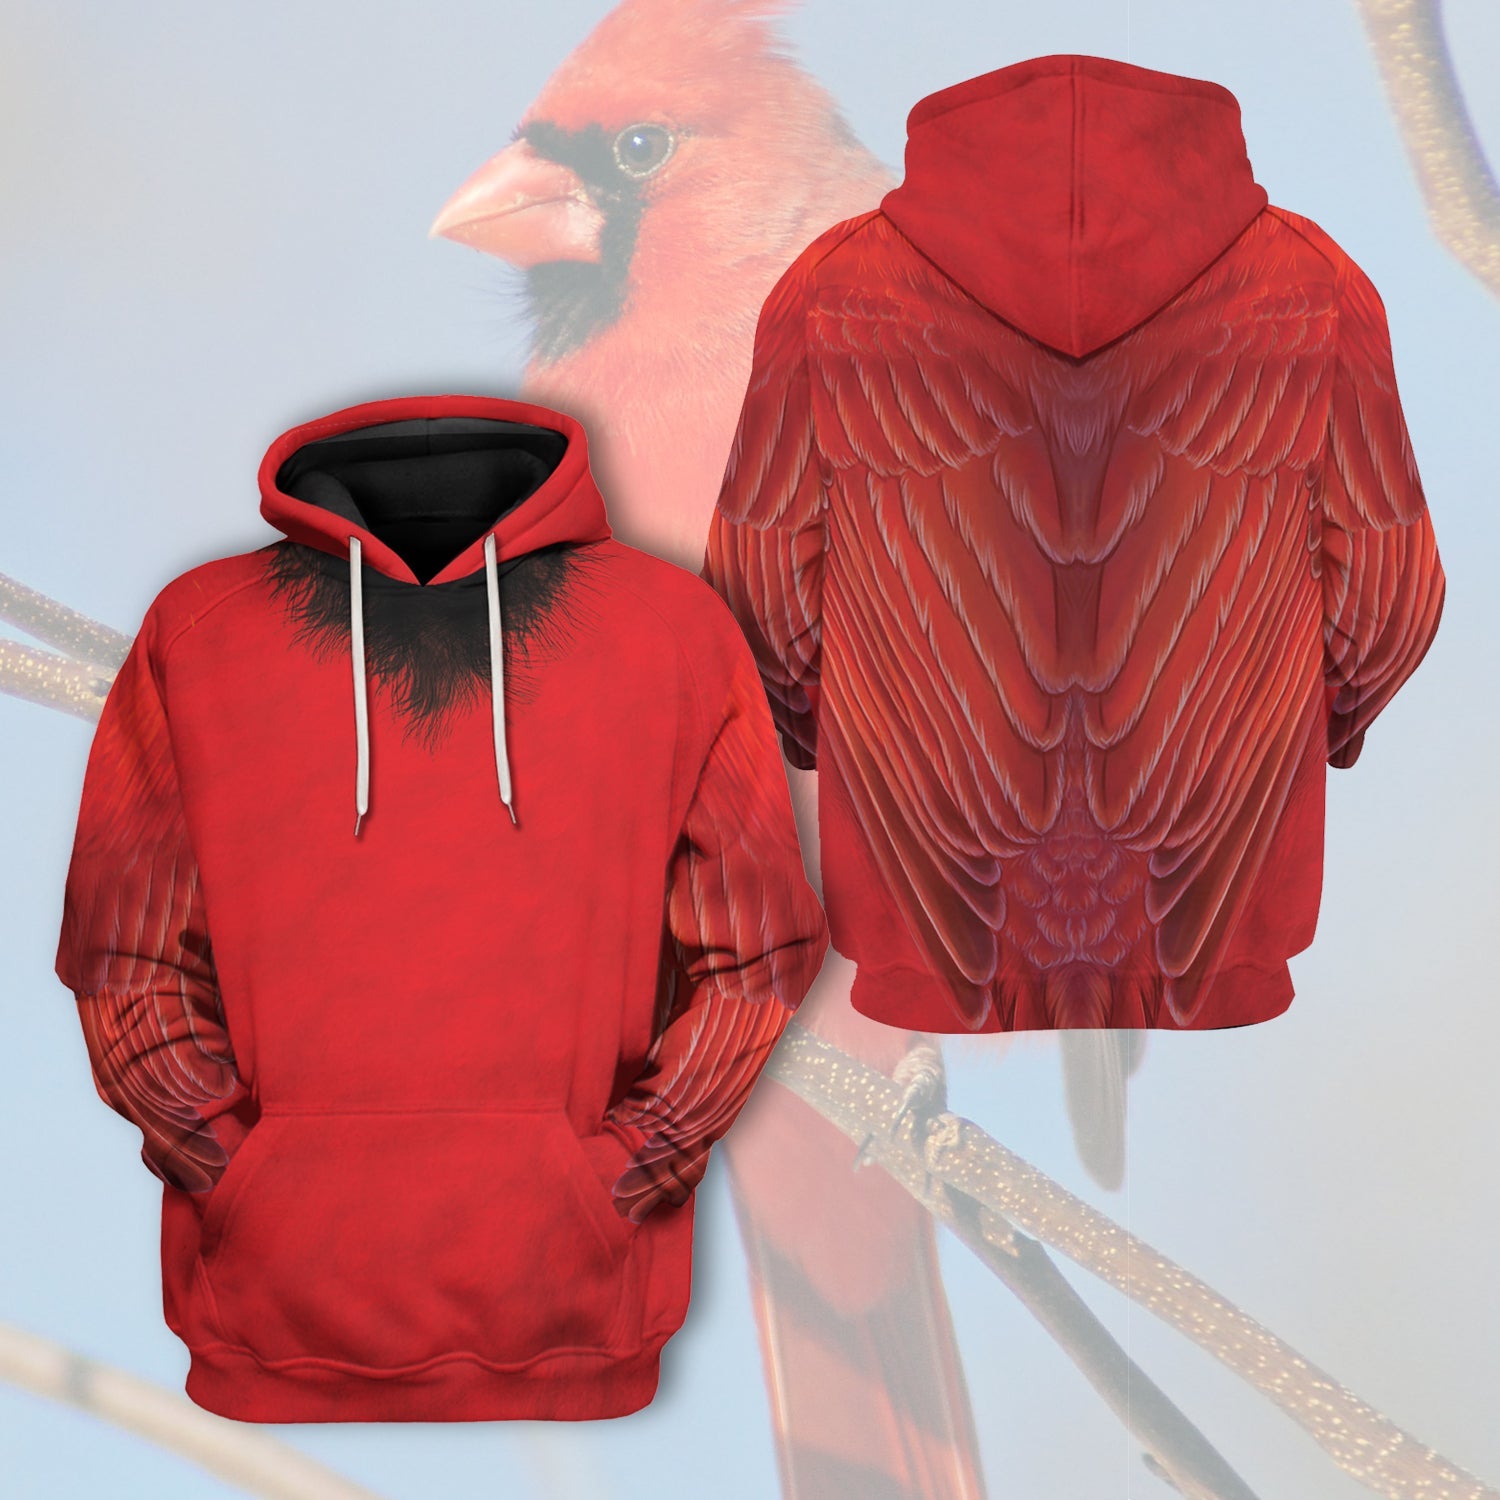 The Cardinal Bird Animal Cosplay track suit 